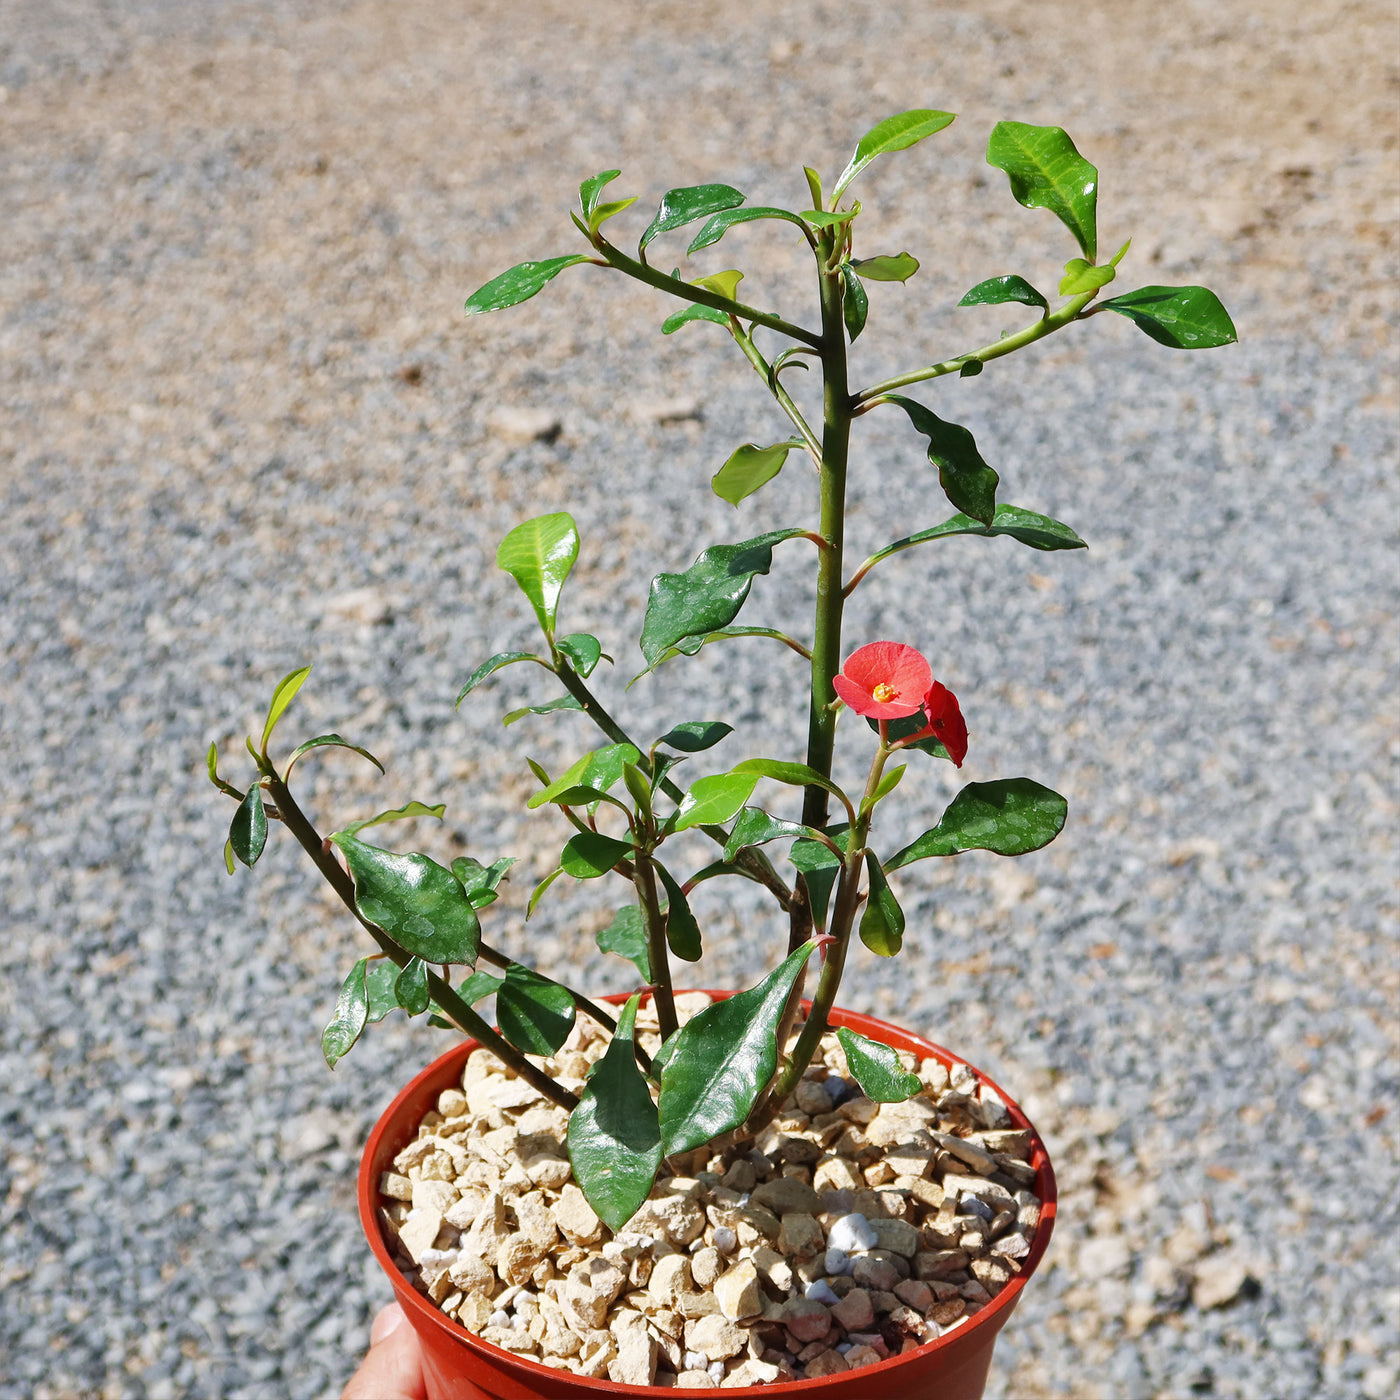 Thornless Crown of Thorns - Euphorbia geroldii